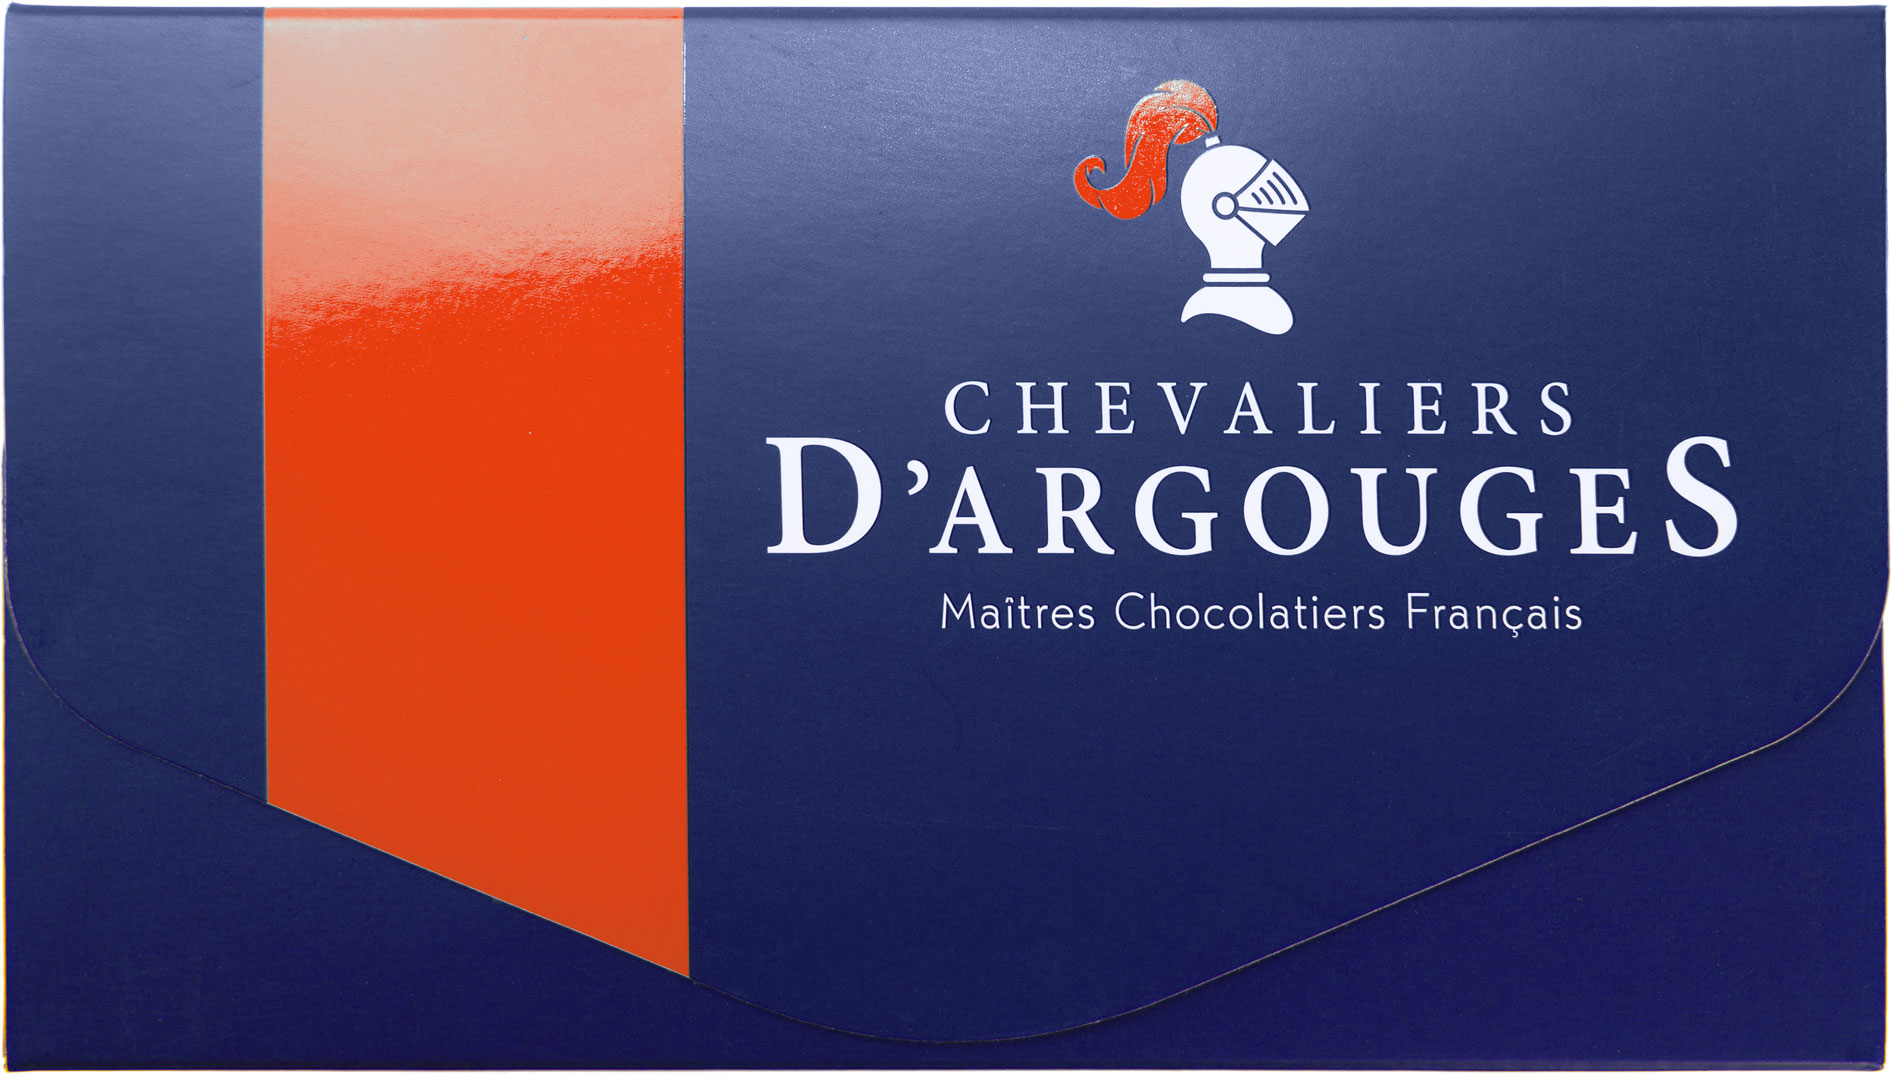 CHEVALIERS D'ARGOUGES Les Chevaliers d'Argouges assortiment de